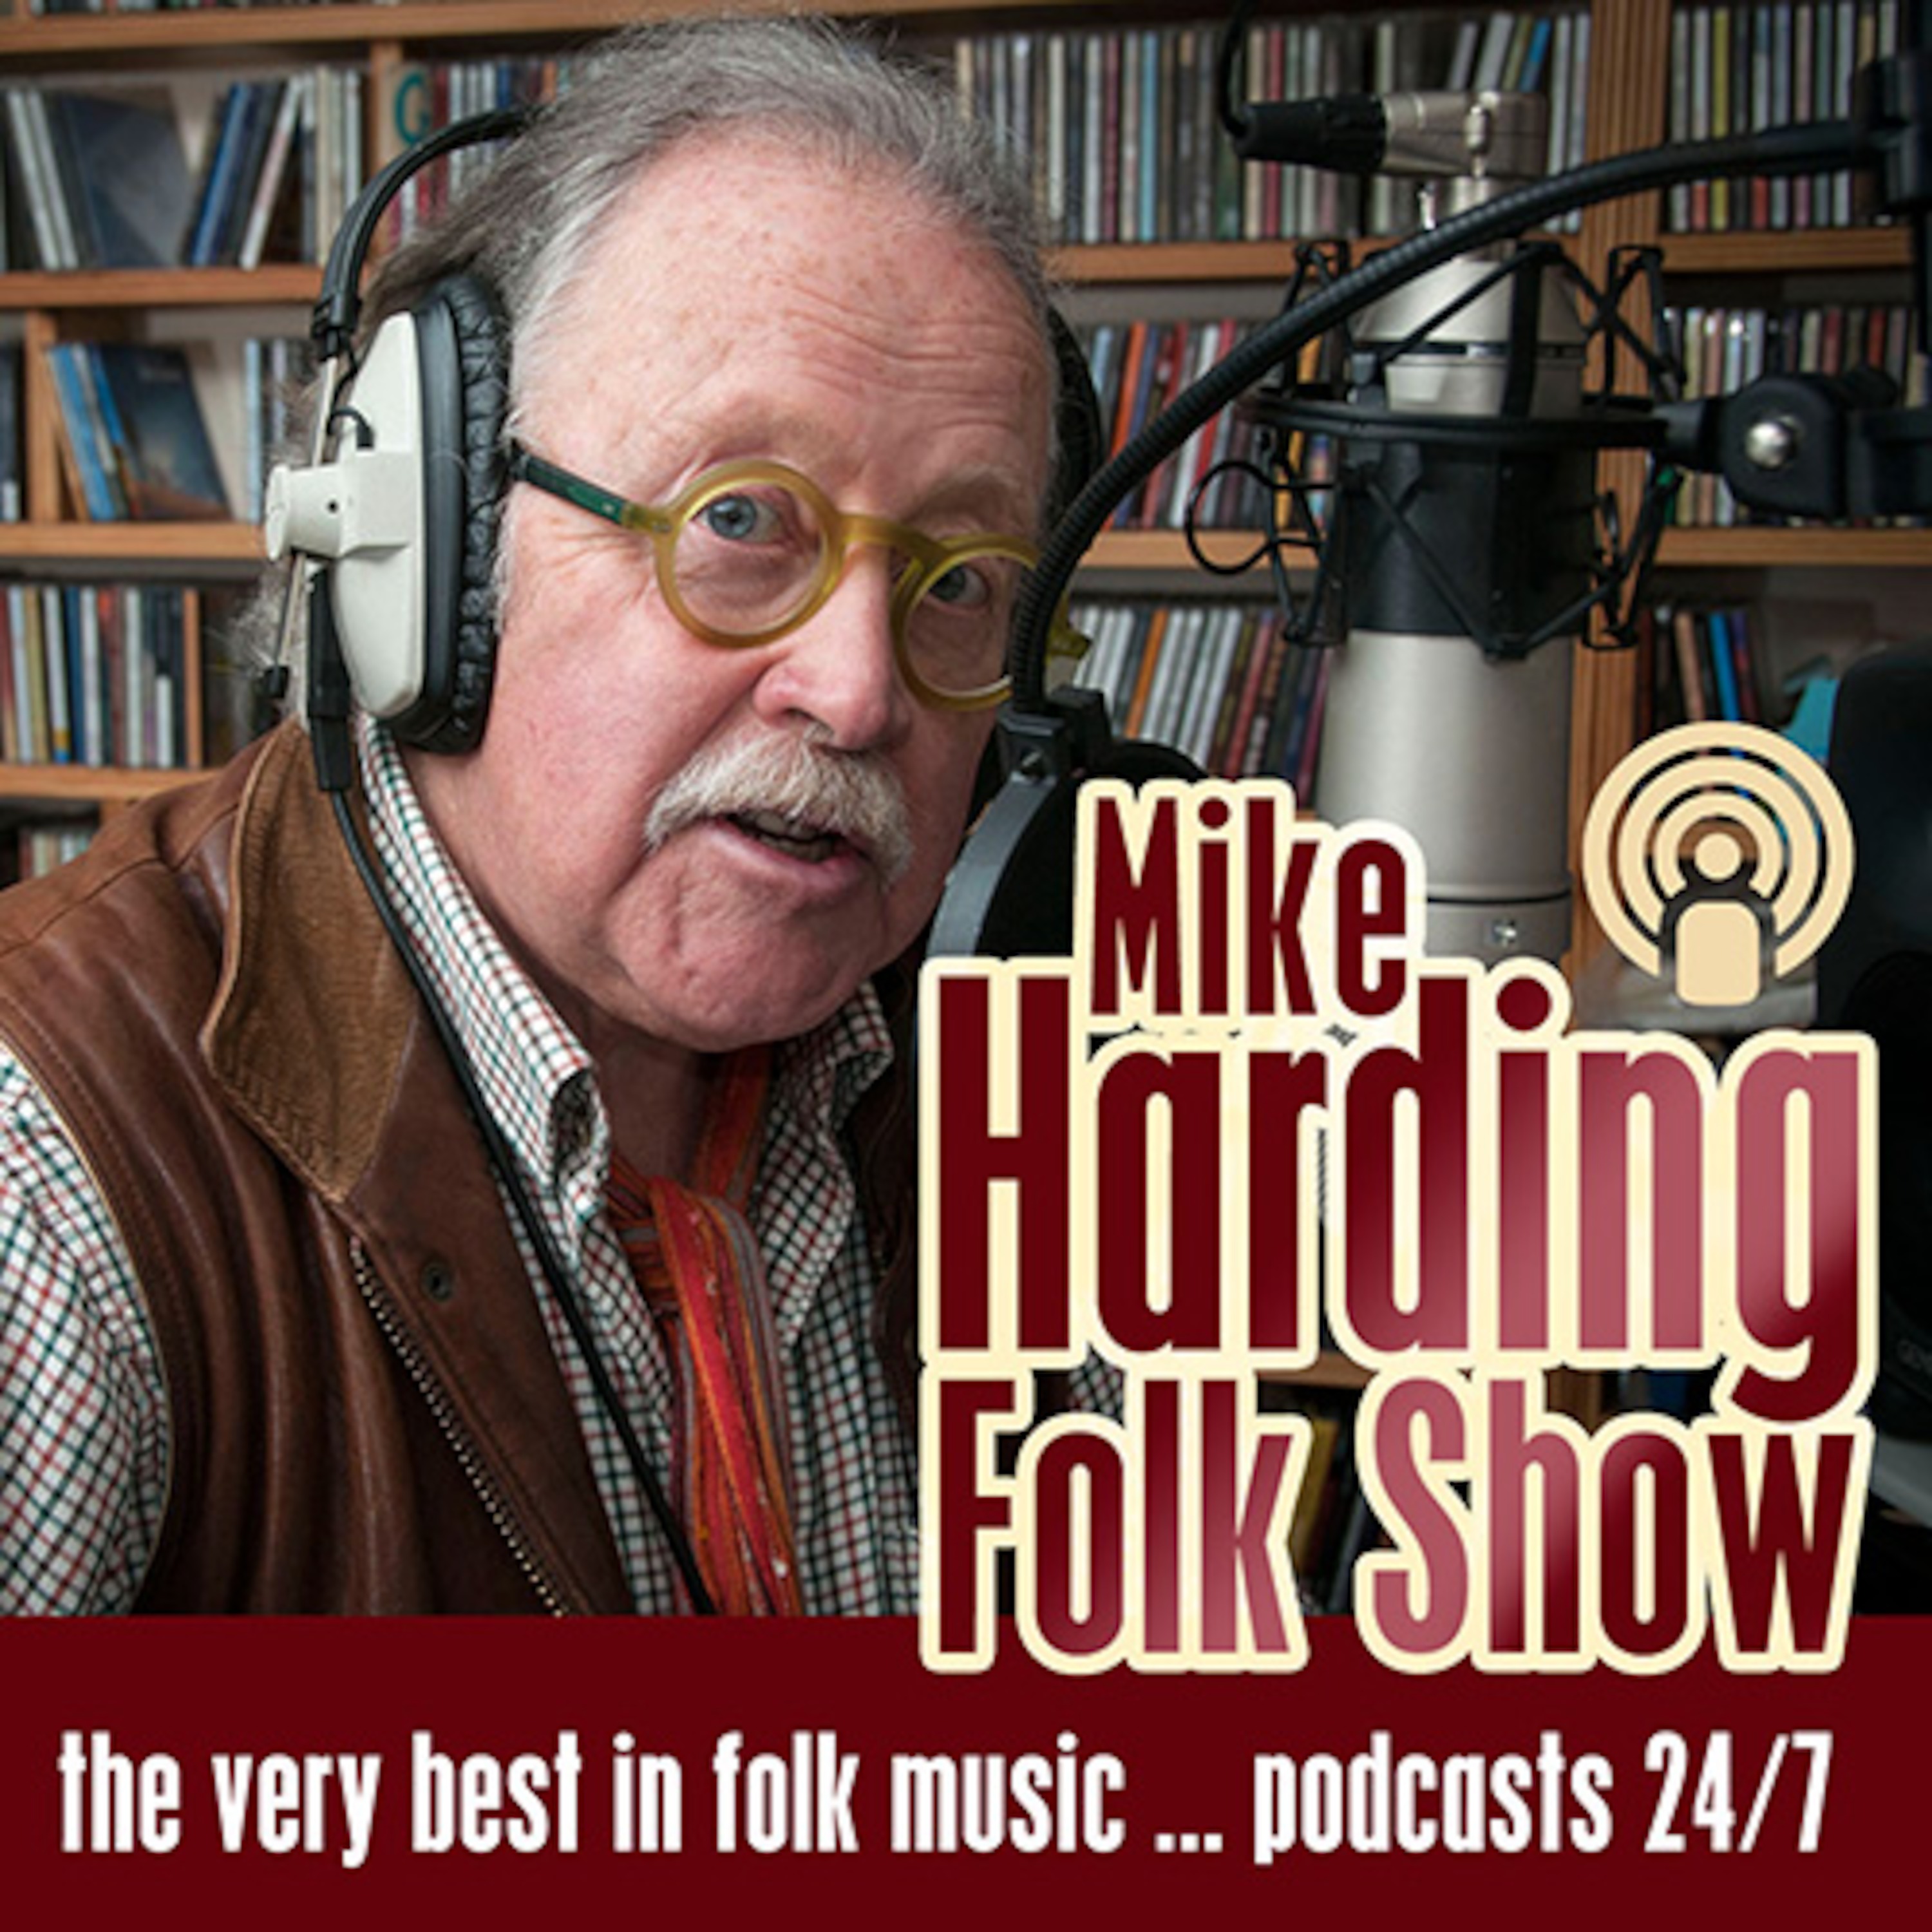 Mike Harding Folk Show 59